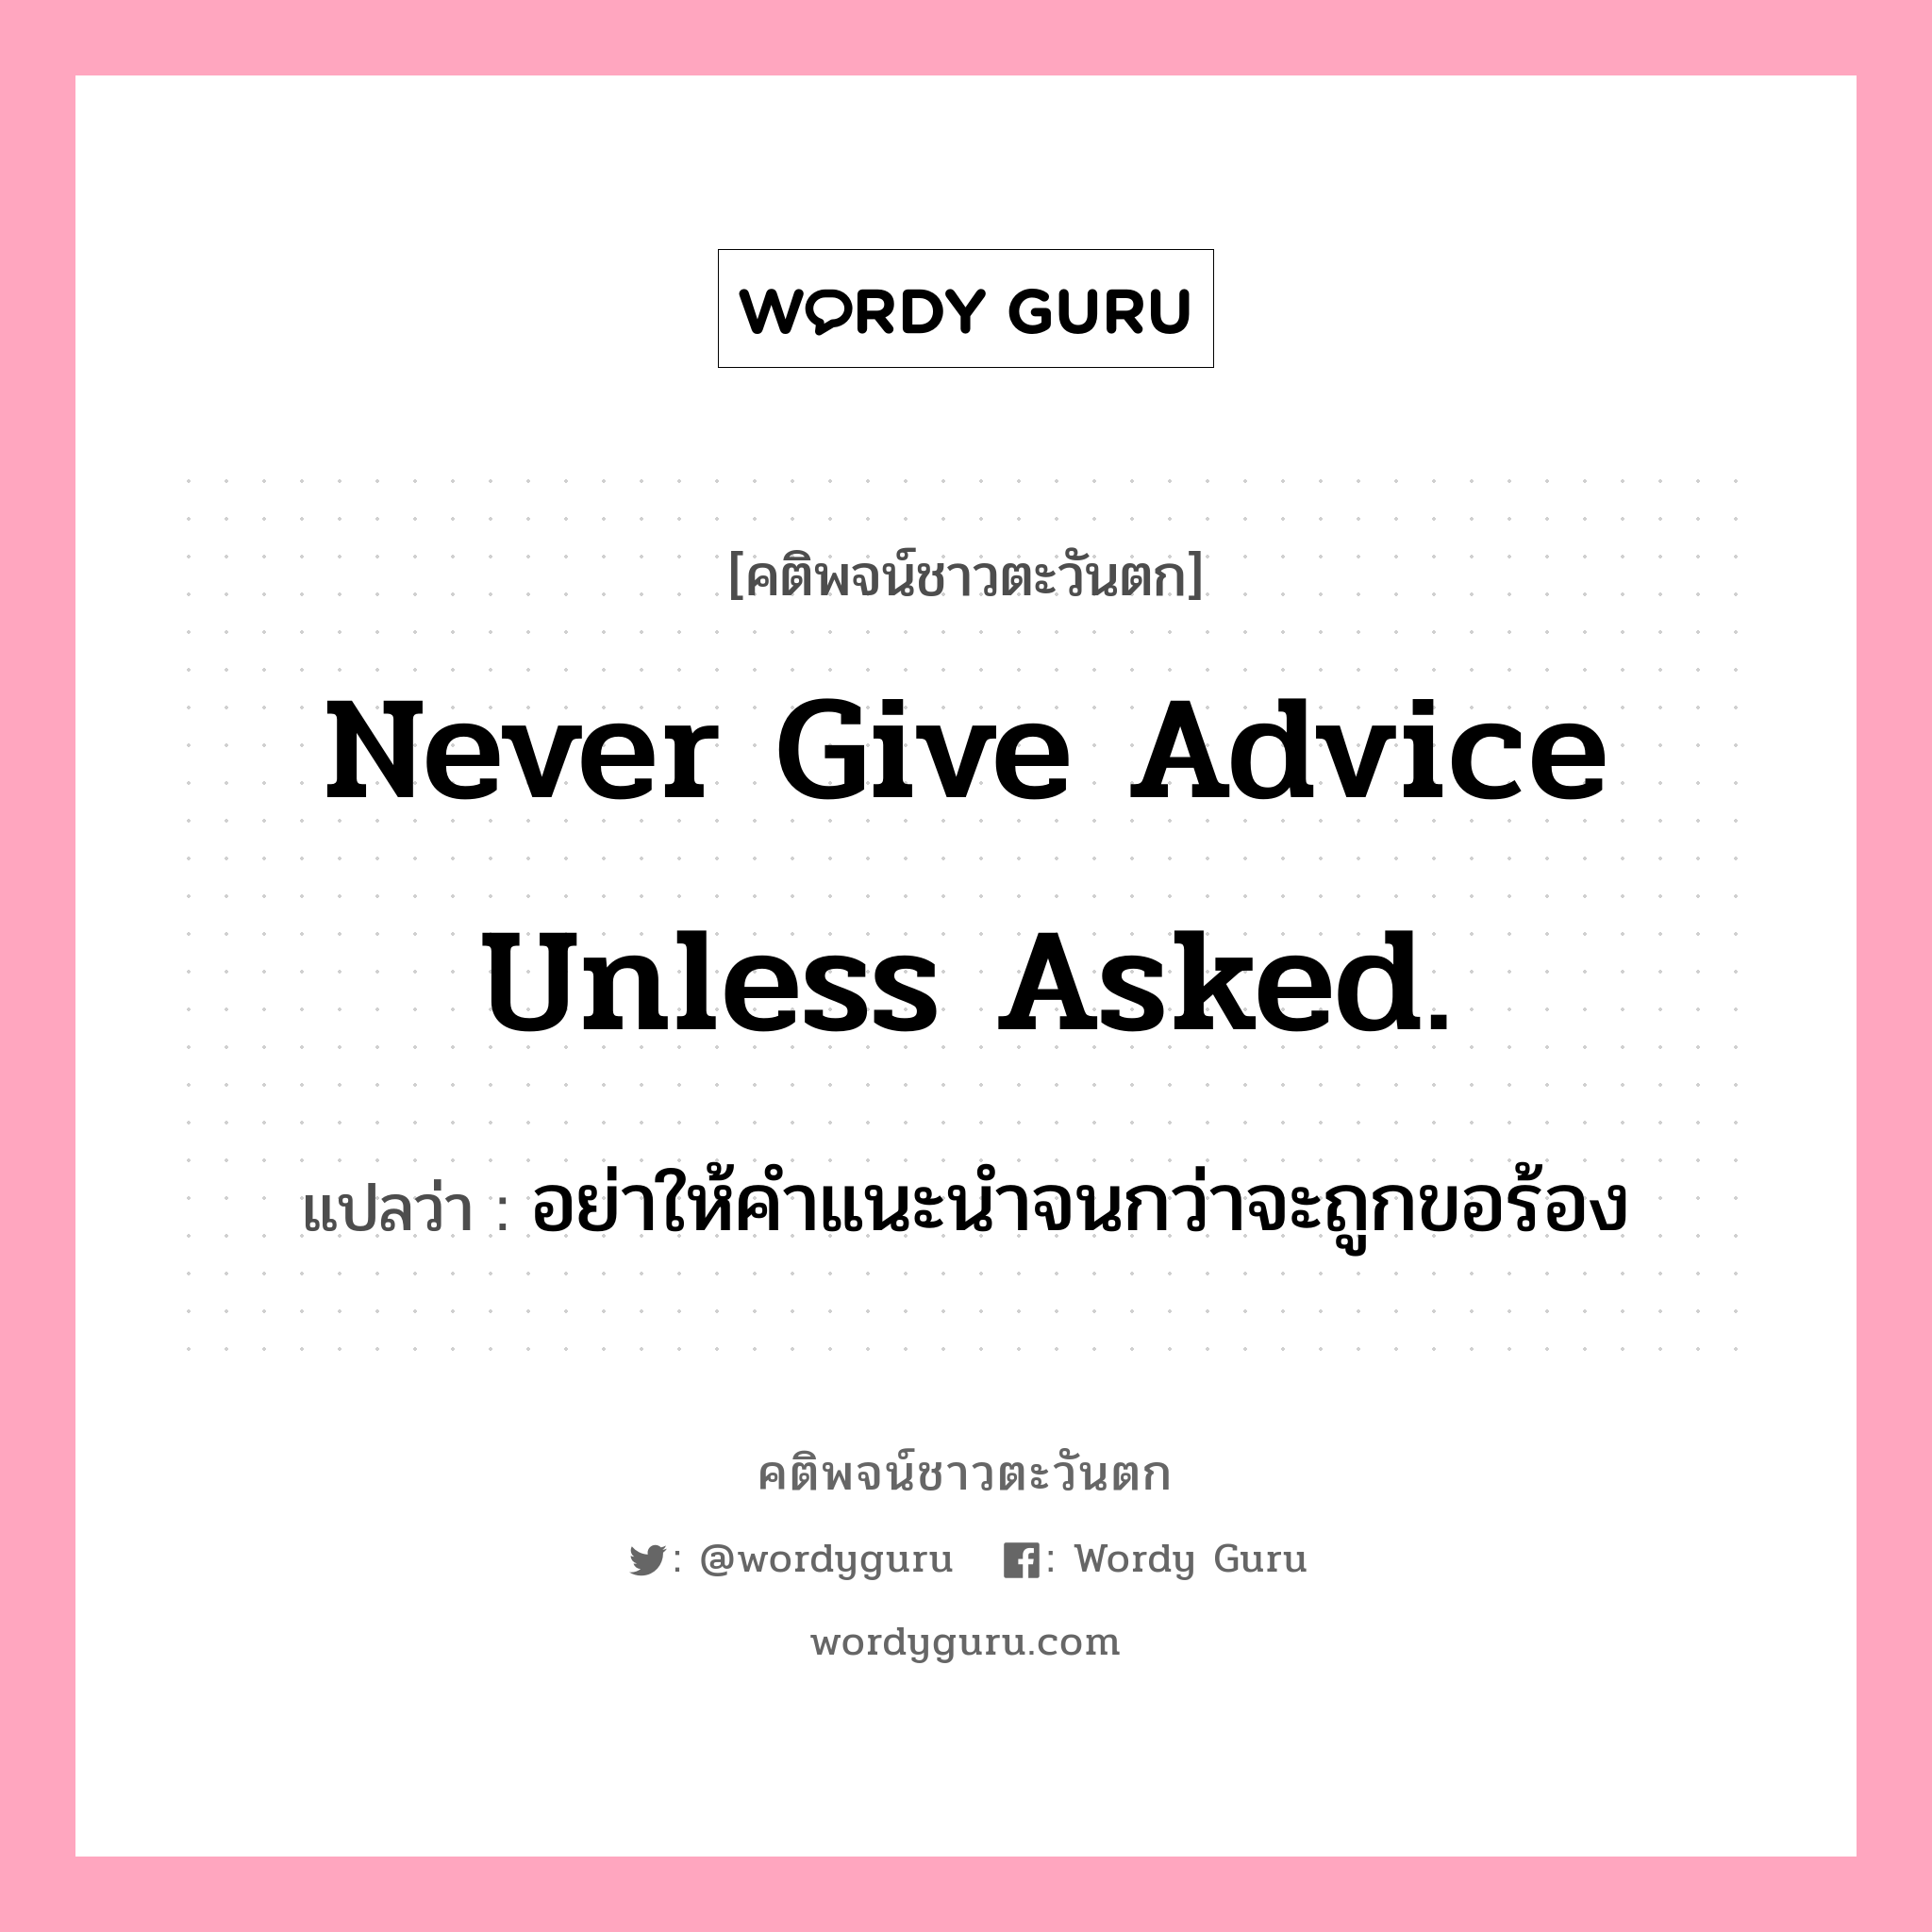 Never give advice unless asked., คติพจน์ชาวตะวันตก Never give advice unless asked. แปลว่า อย่าให้คำแนะนำจนกว่าจะถูกขอร้อง